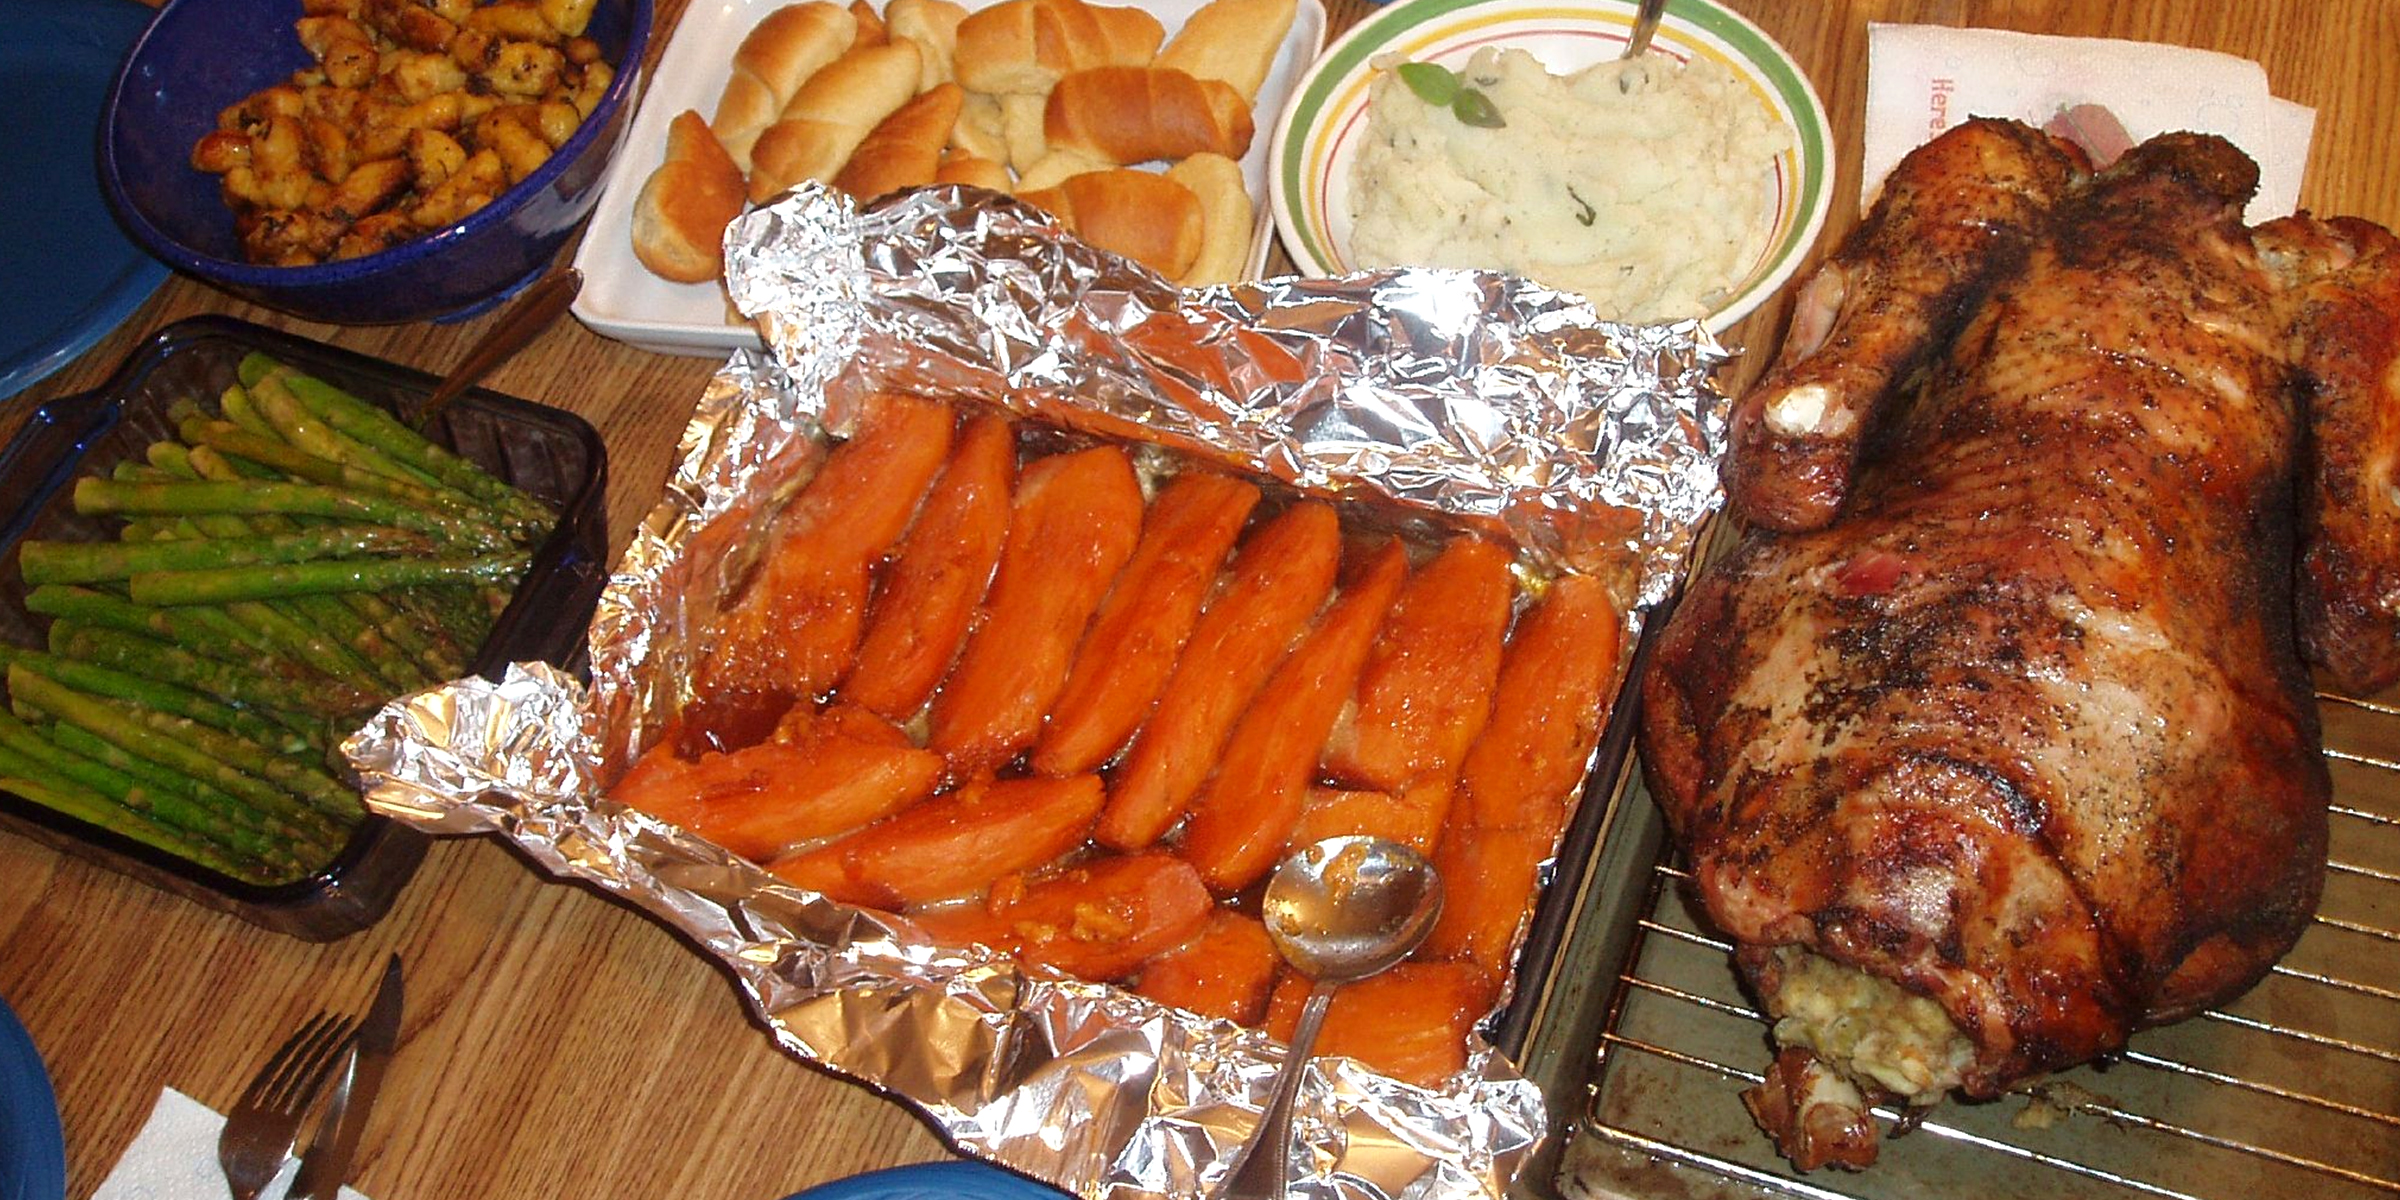 Repas de Thanksgiving | Source : Flickr.com/johncarljohnson/CC BY 2.0